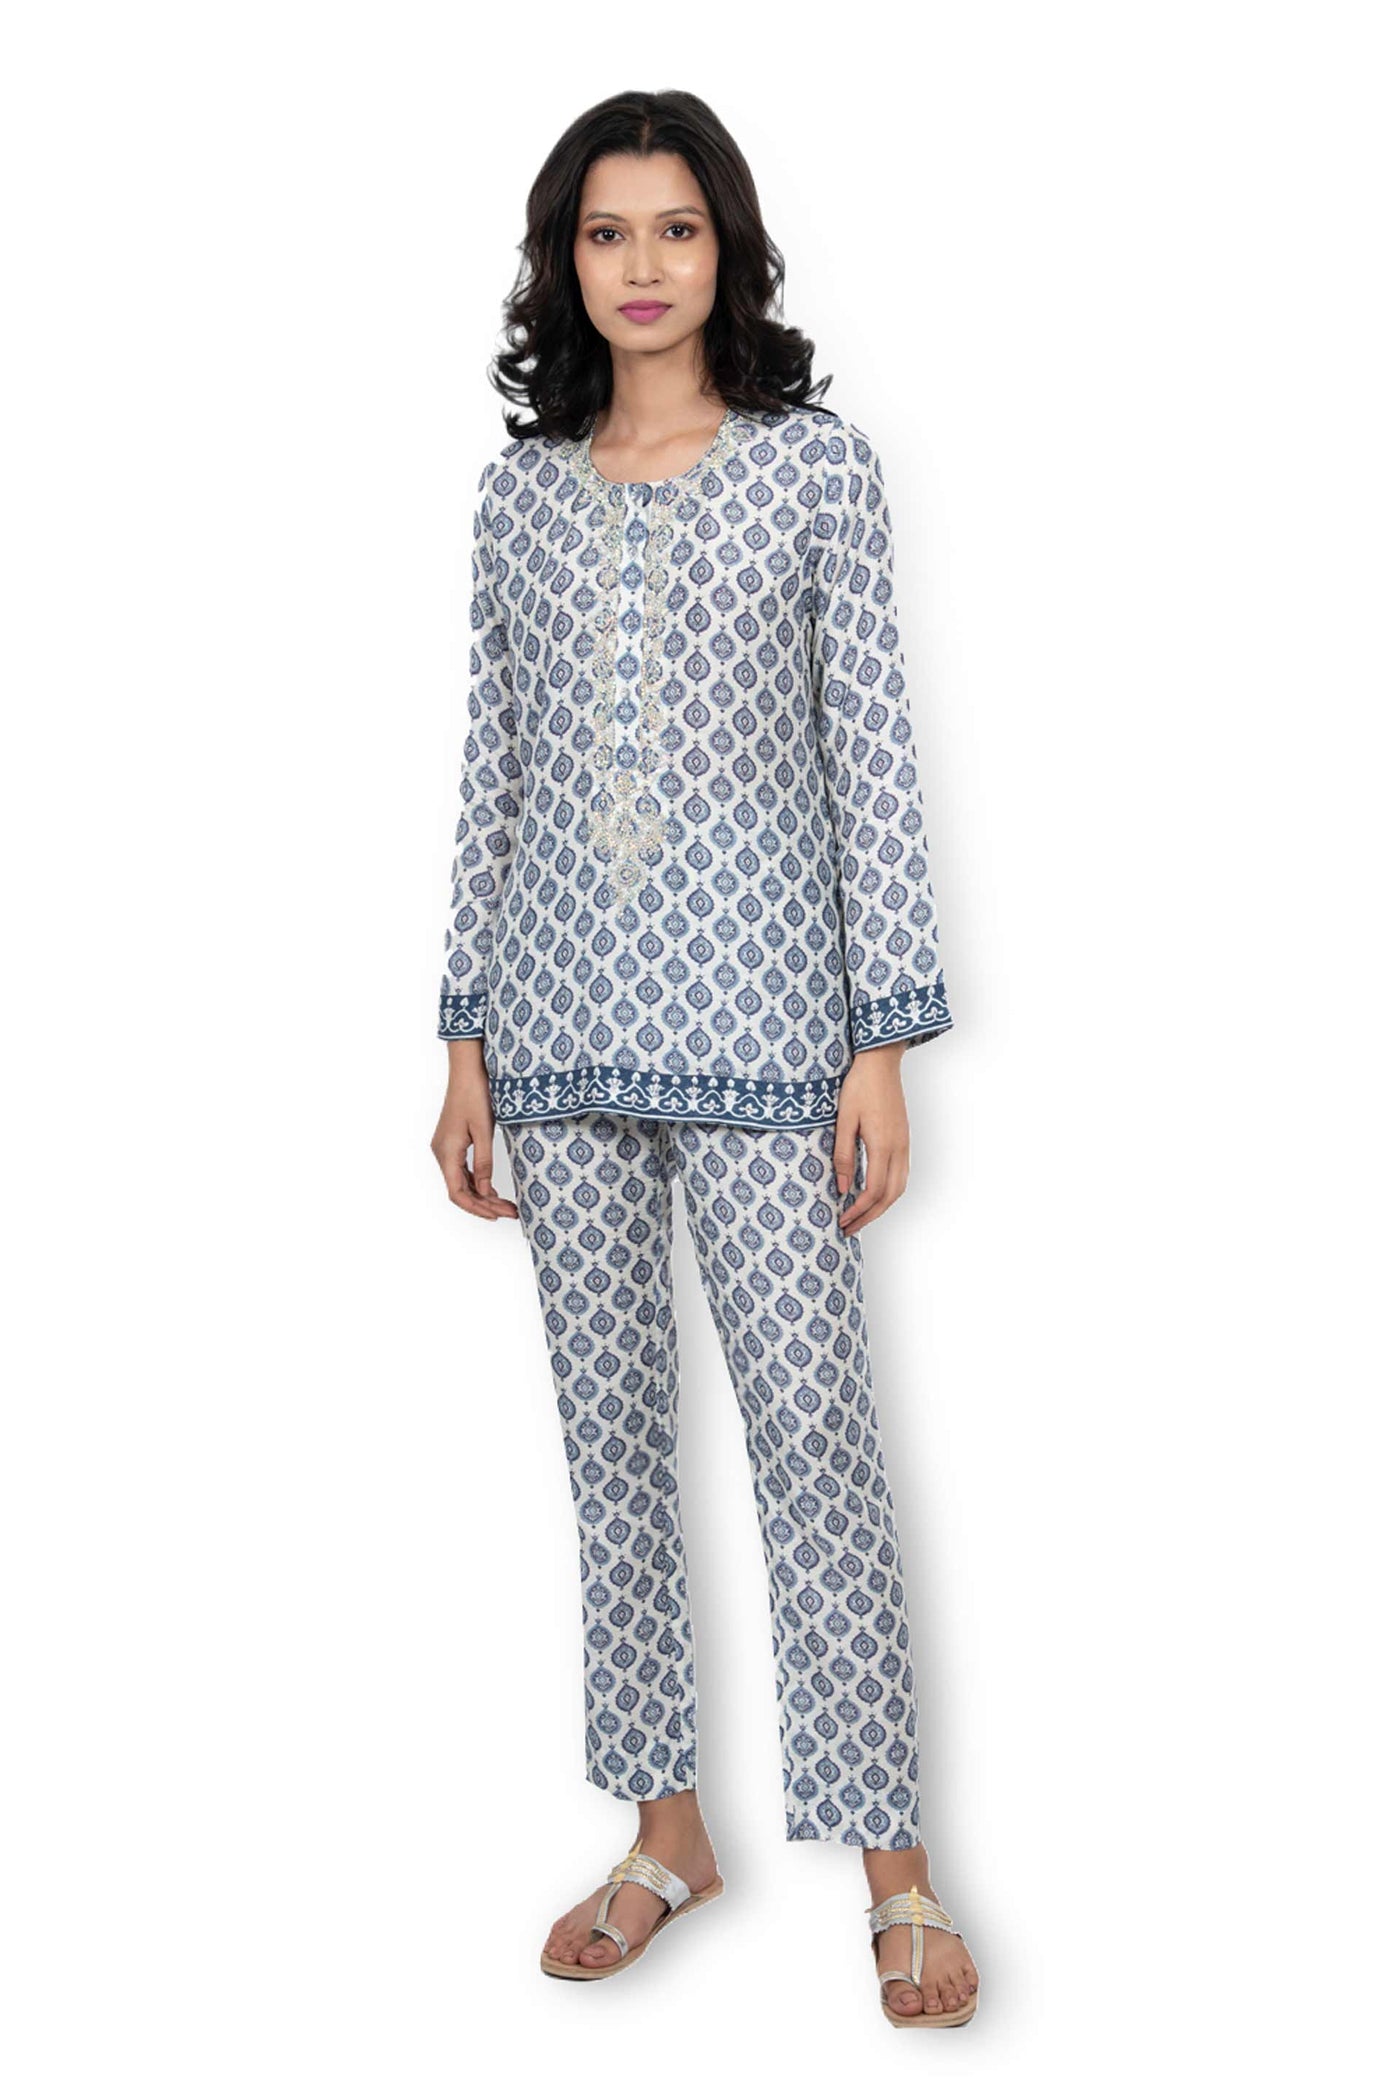 Monisha Jaising Cerulean Set blue white online shopping melange singapore indian designer wear